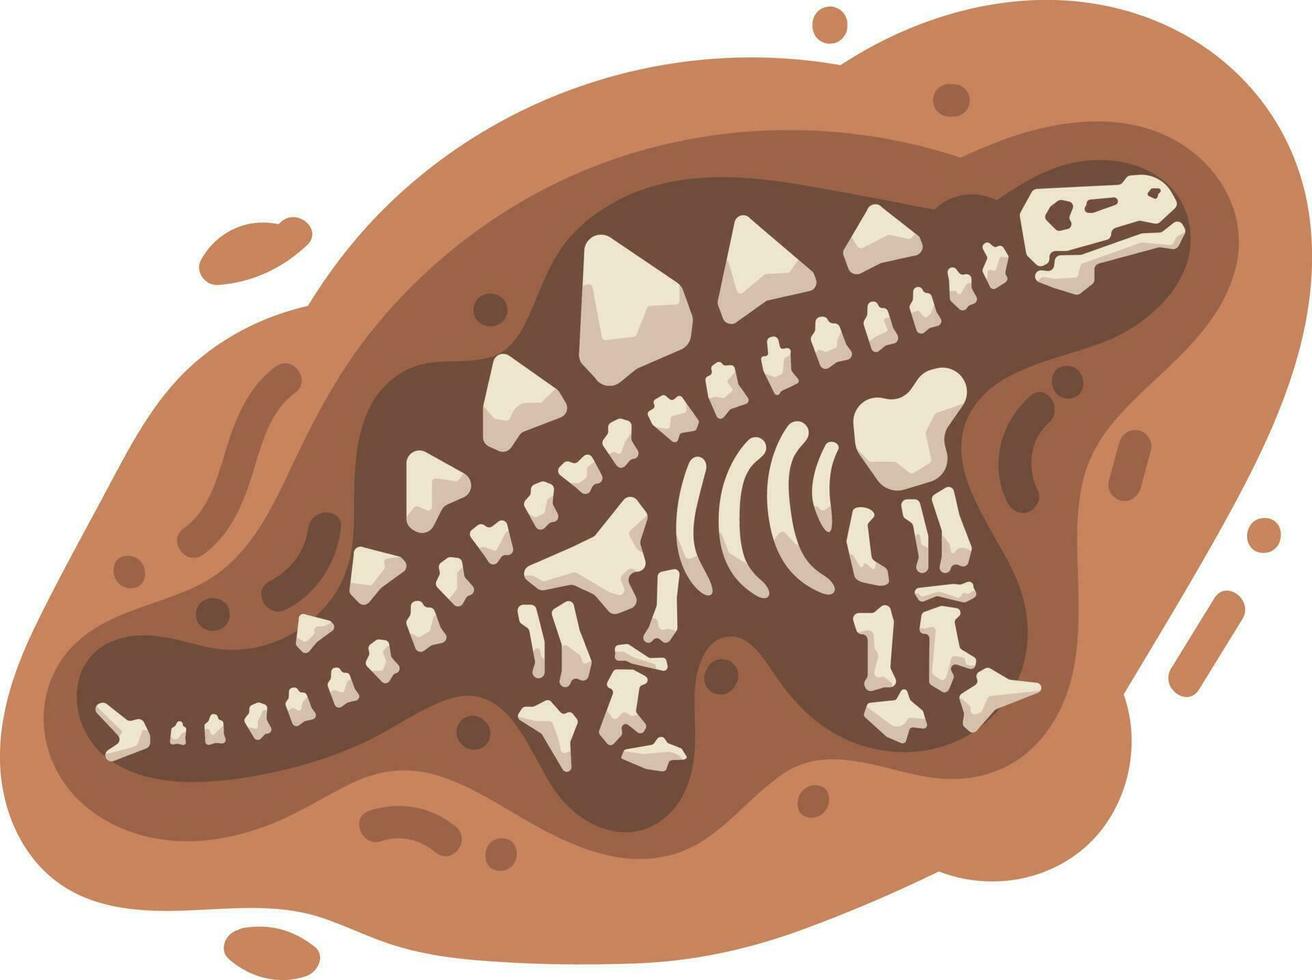 tyrannosaurus rex dinosaur vector. Triceratops dinosaur fossil icon. Vector illustration of prehistoric animal.